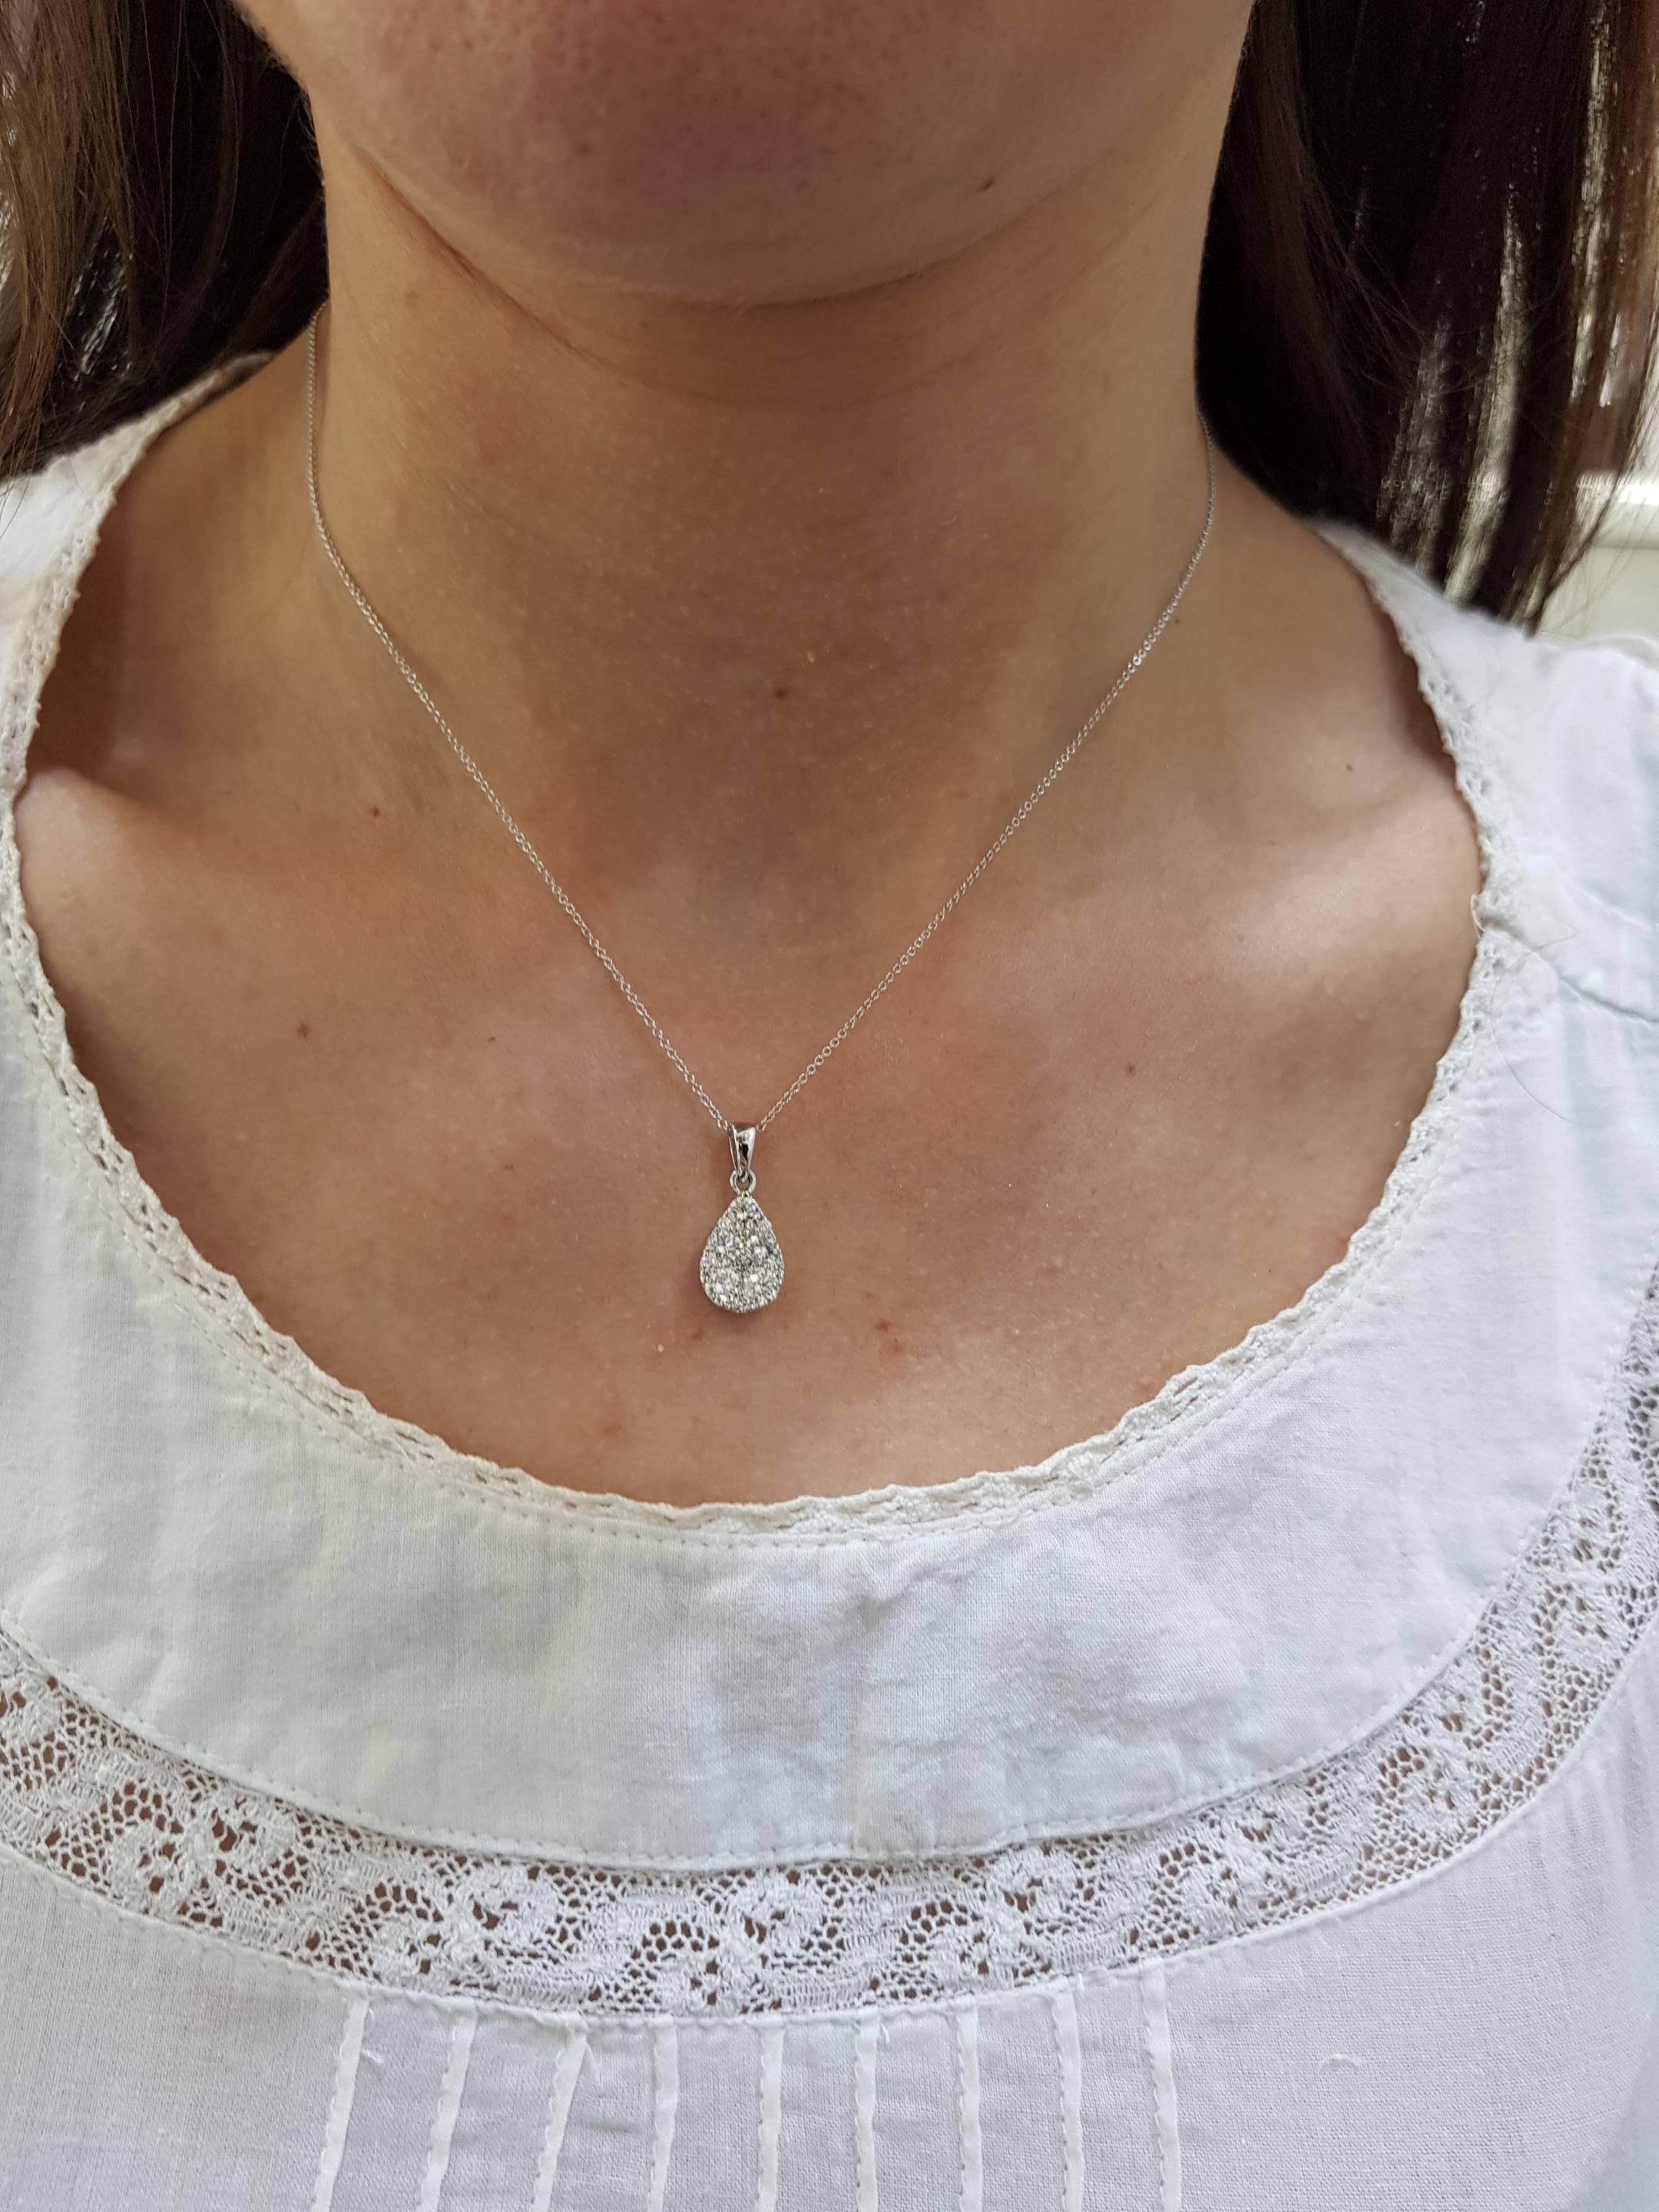 2 carat pear shaped diamond necklace